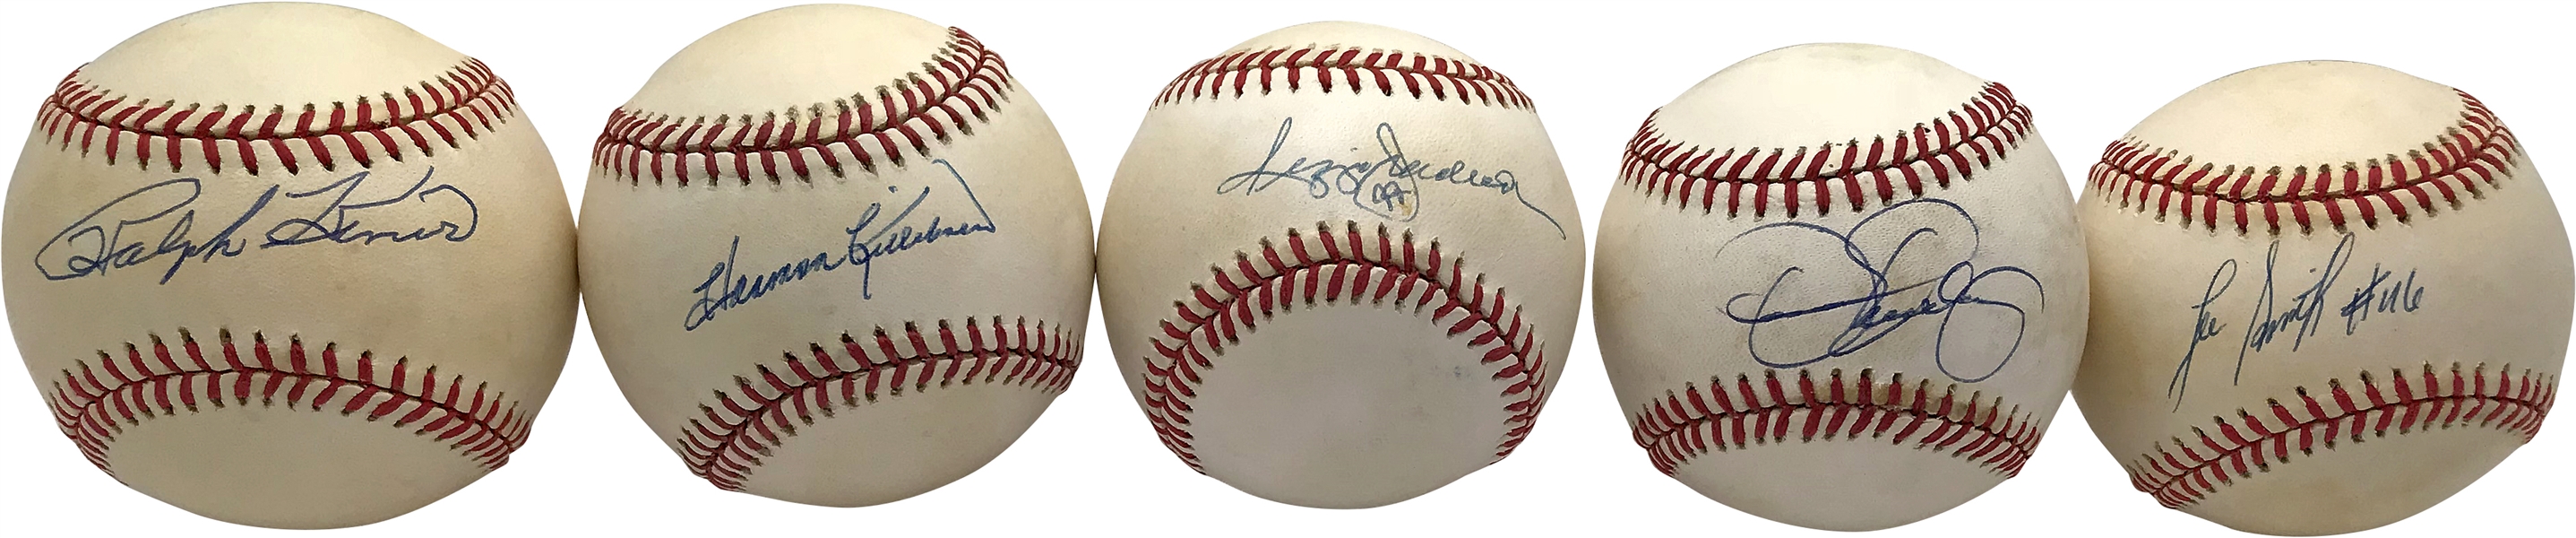 MLB Legends Lot of Ten (10) Single Signed Baseballs w/ Jackson, Mathews & Others (Beckett/BAS Guaranteed)